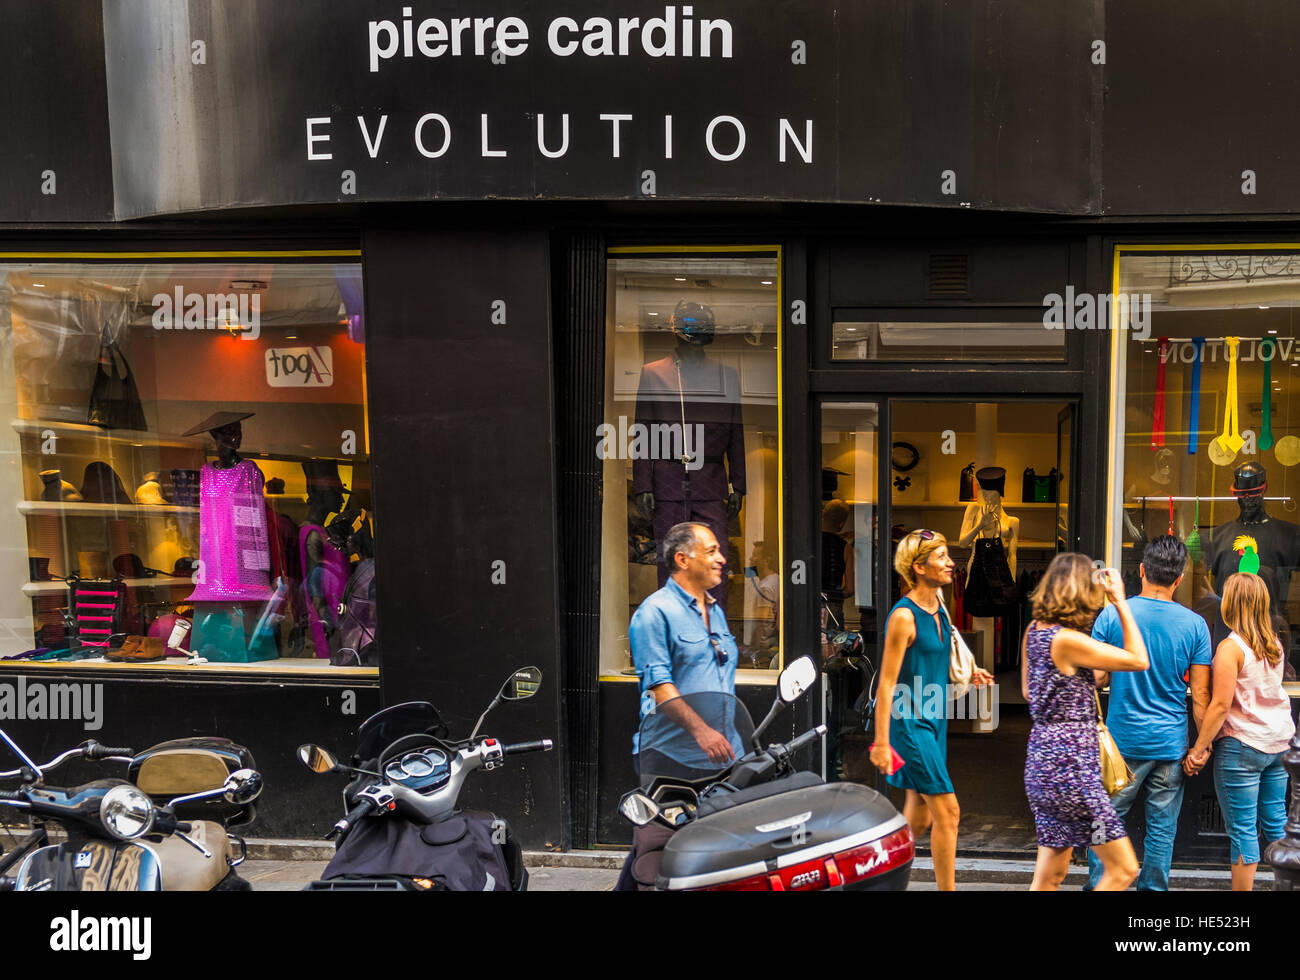 Pierre cardin, Evolution-Shop Stockfoto